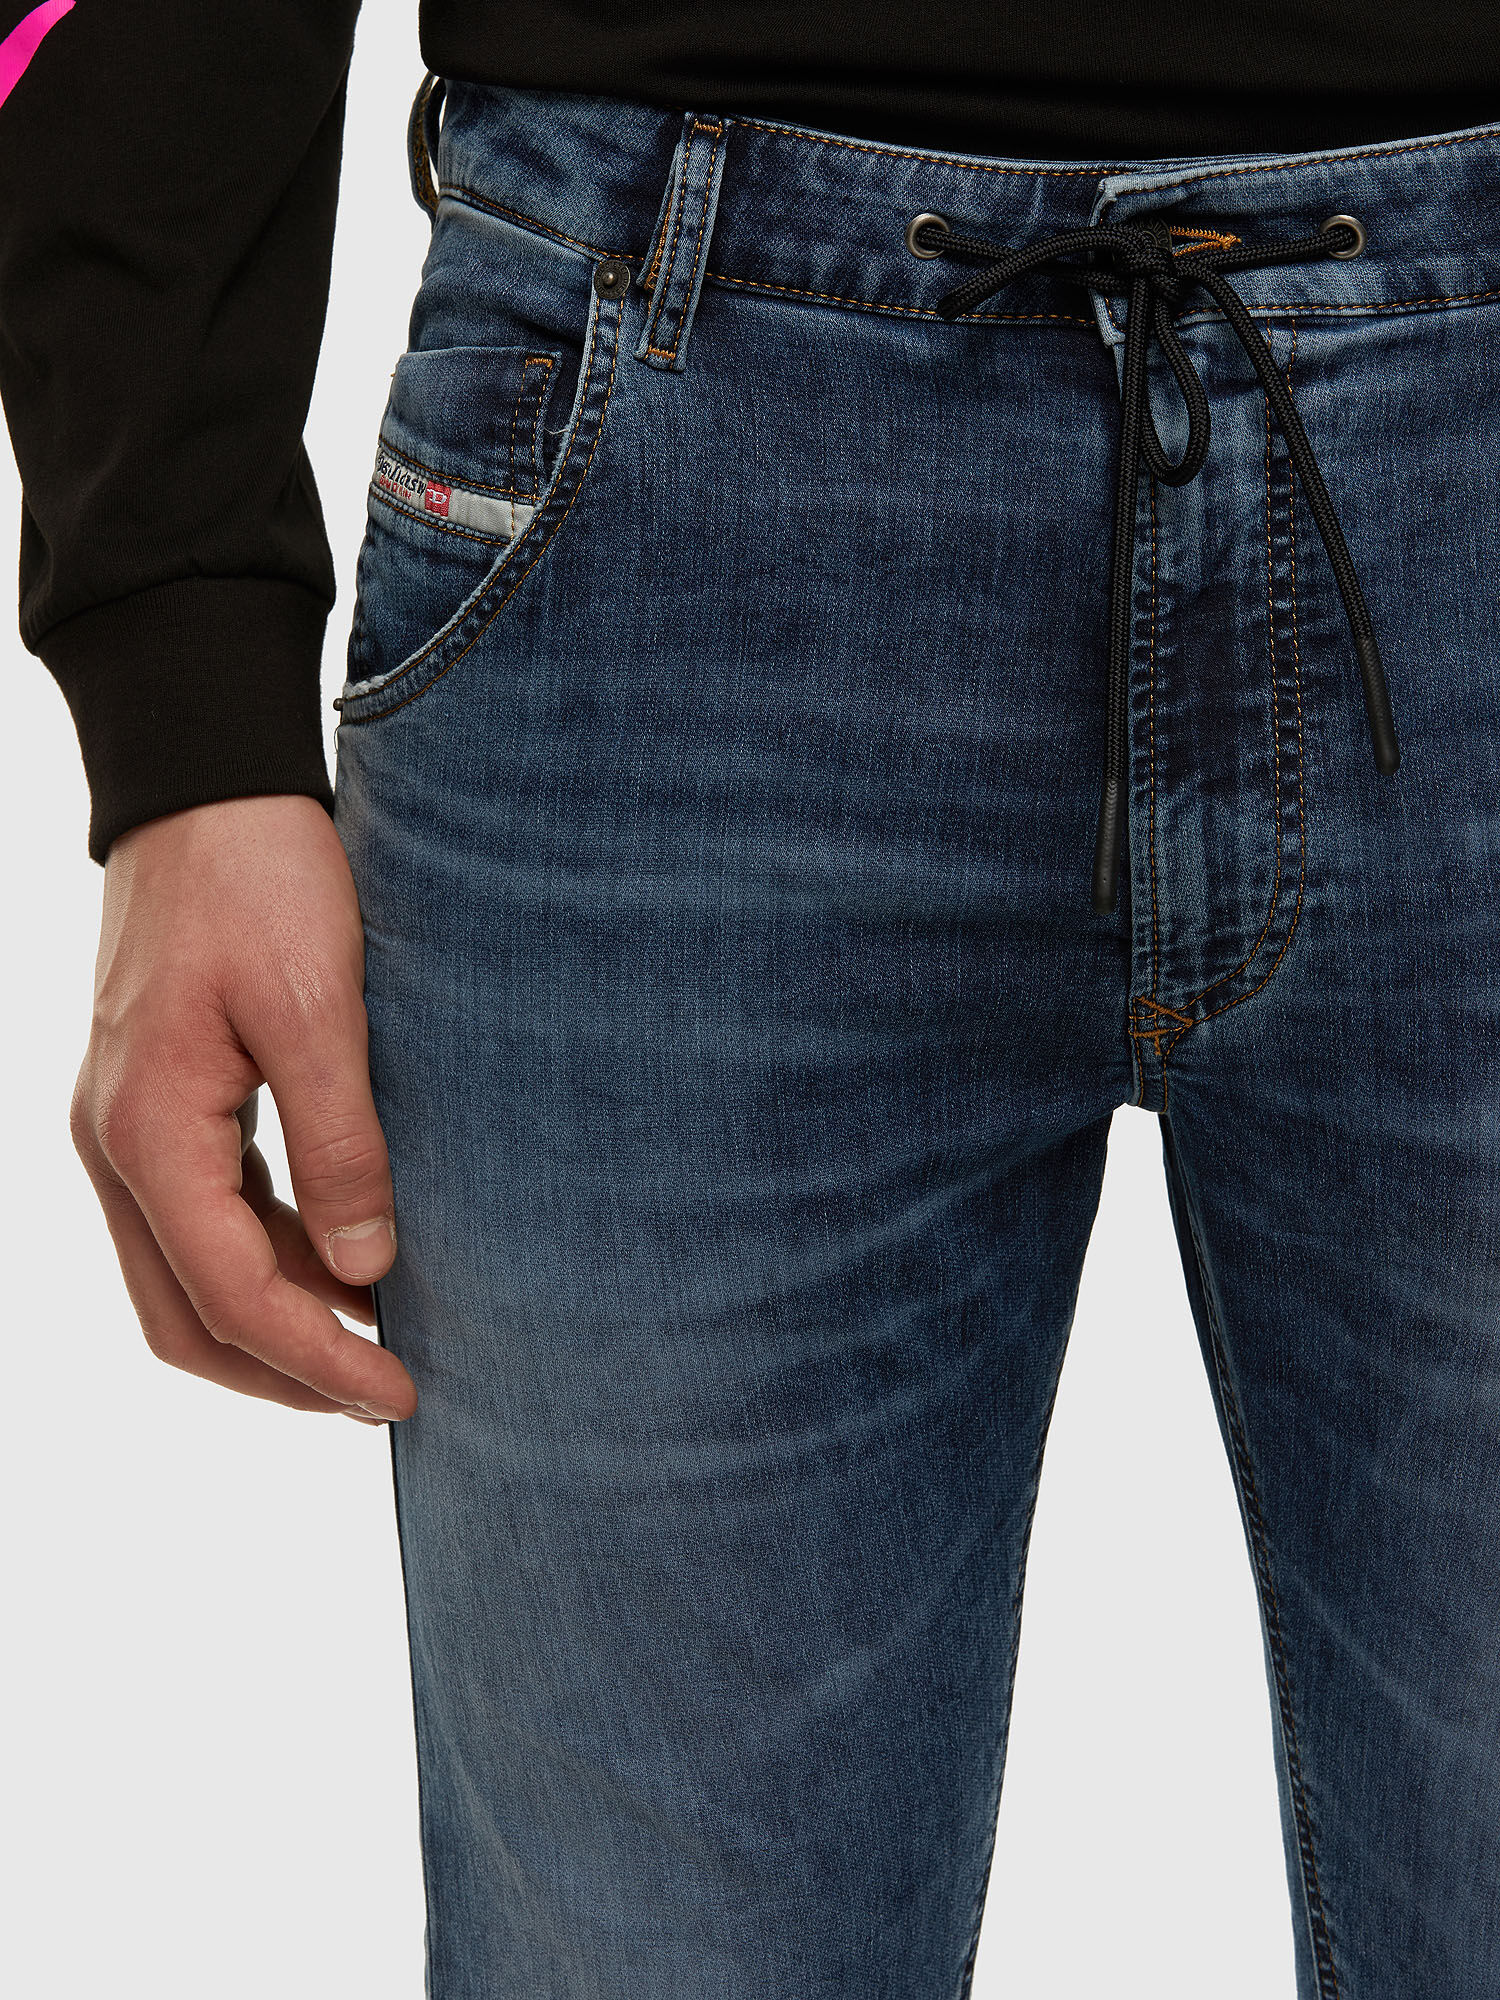 Krooley JoggJeans 069NL Man: Tapered Medium blue Jeans | Diesel